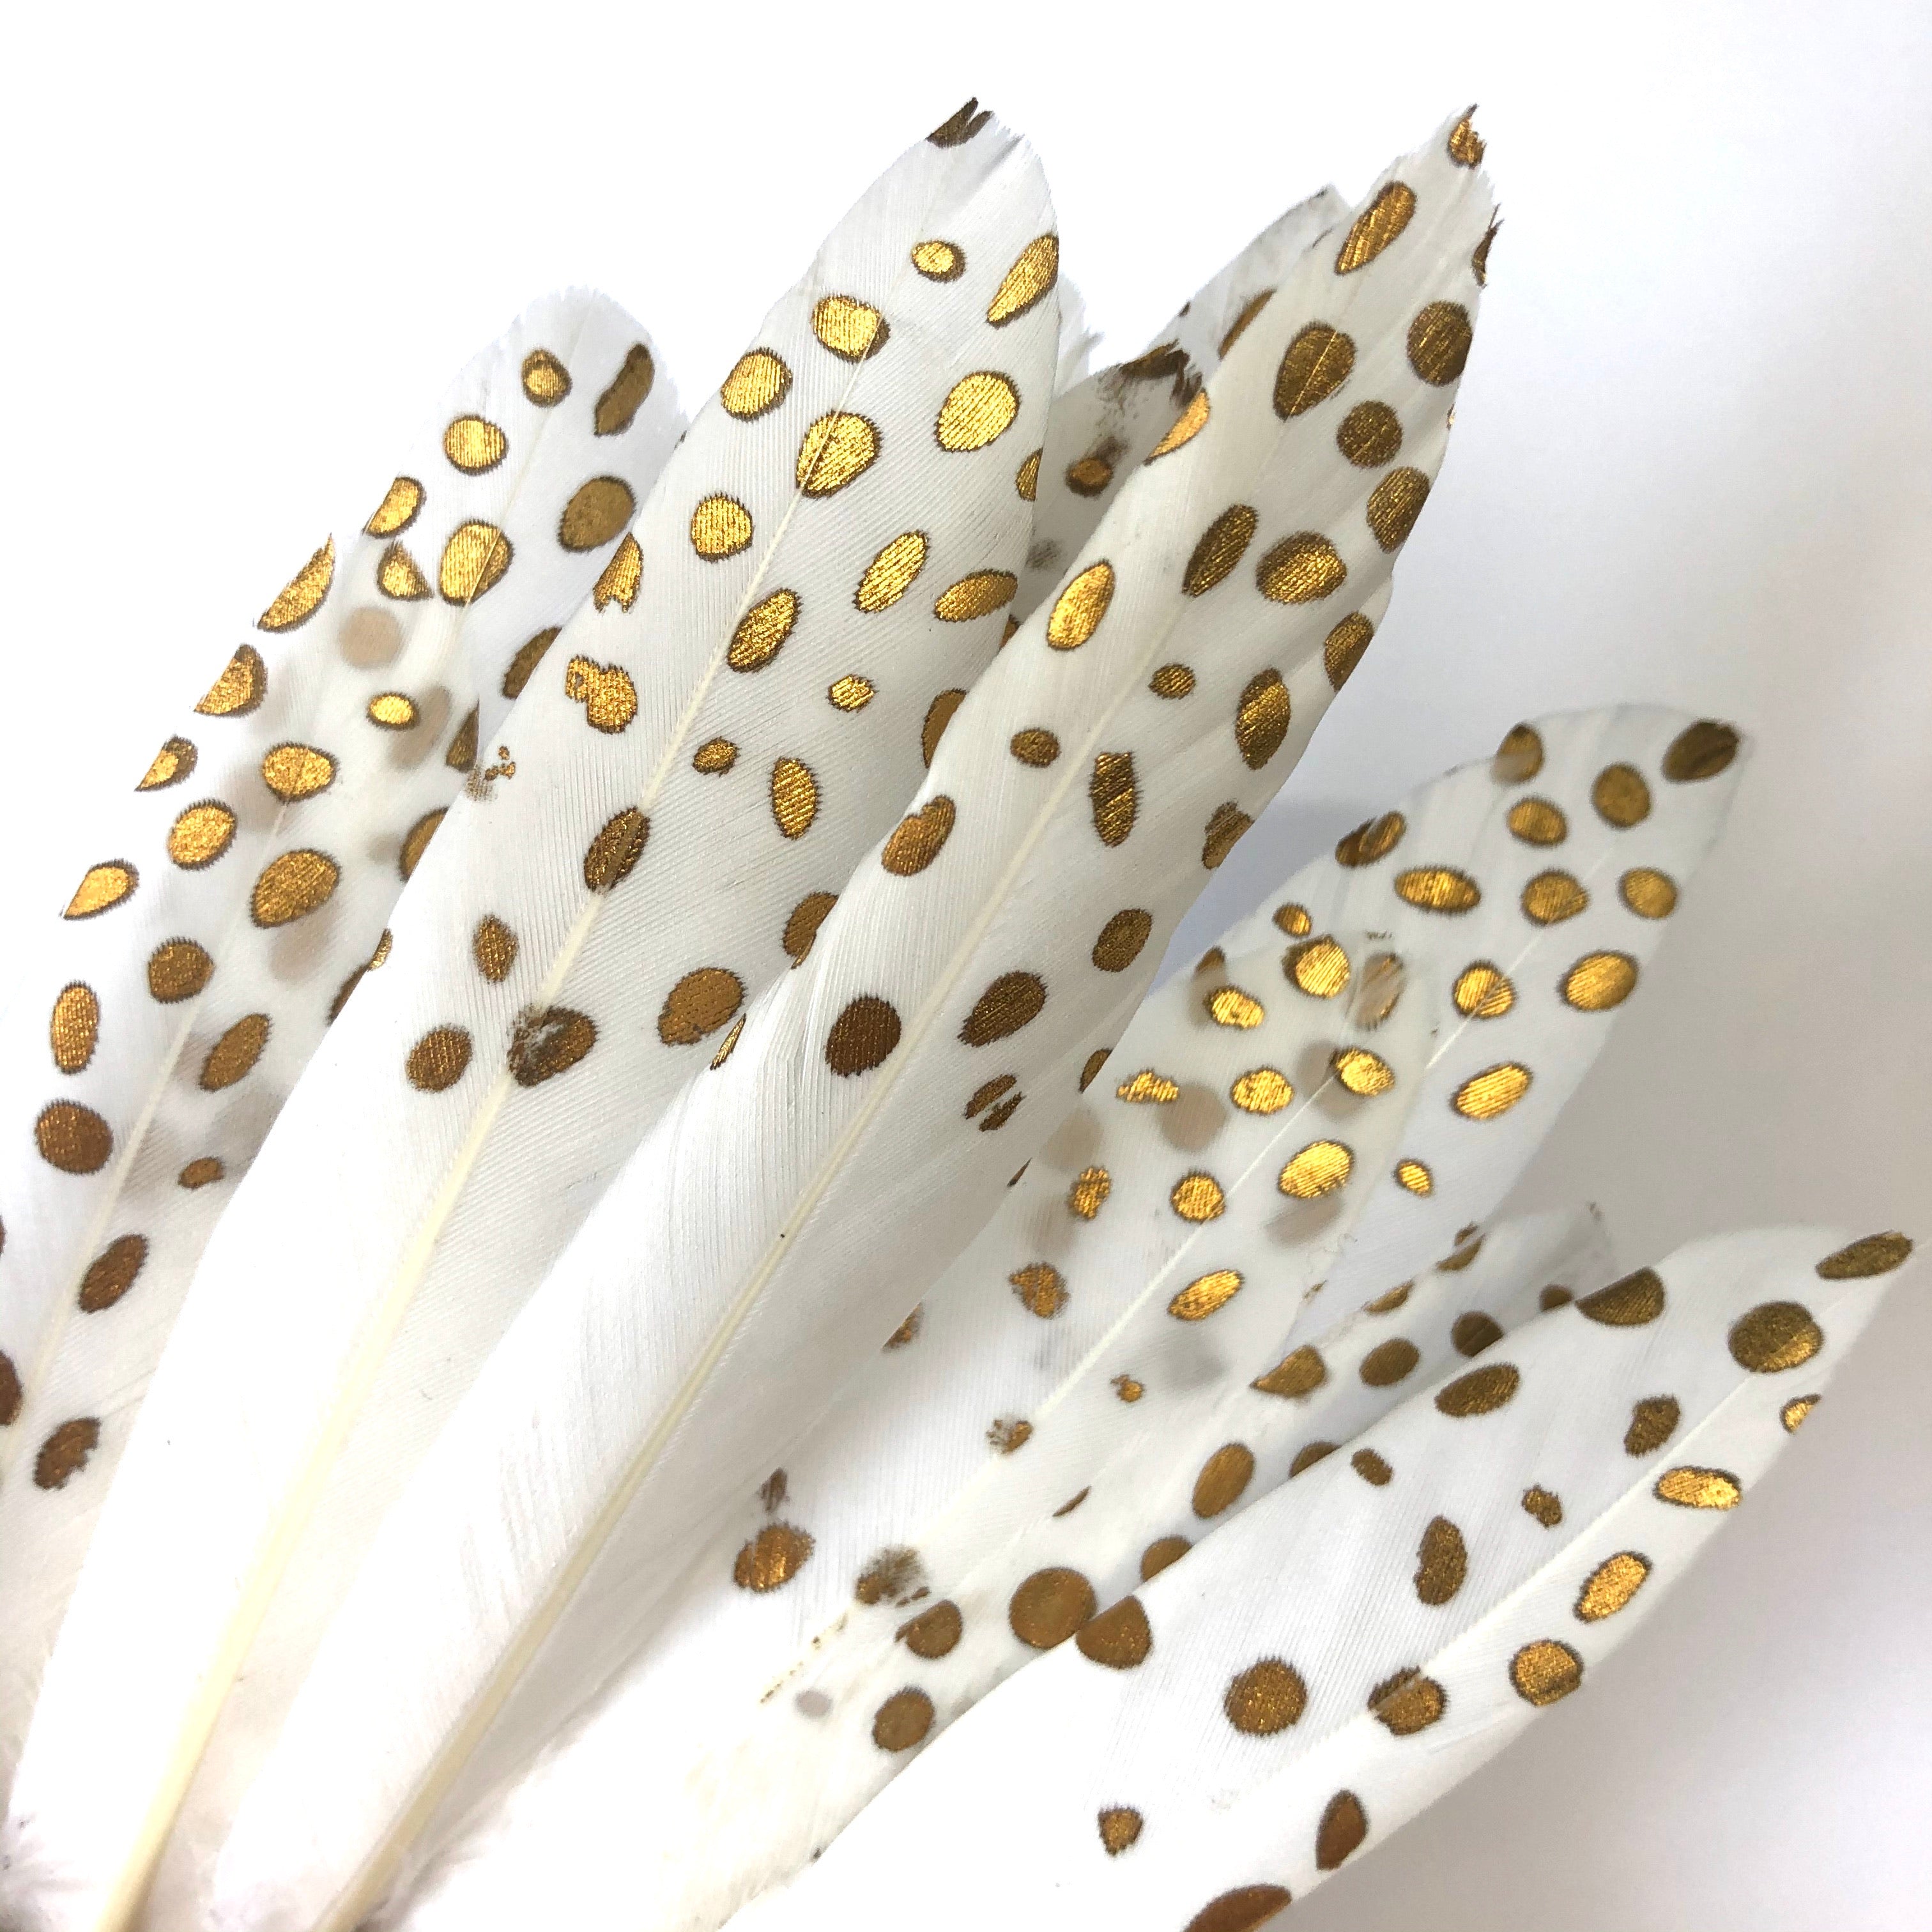 Tiny Goose Pointer Printed White Feather Art Craft - Metallic Gold Spots Style 9 x 10 pcs